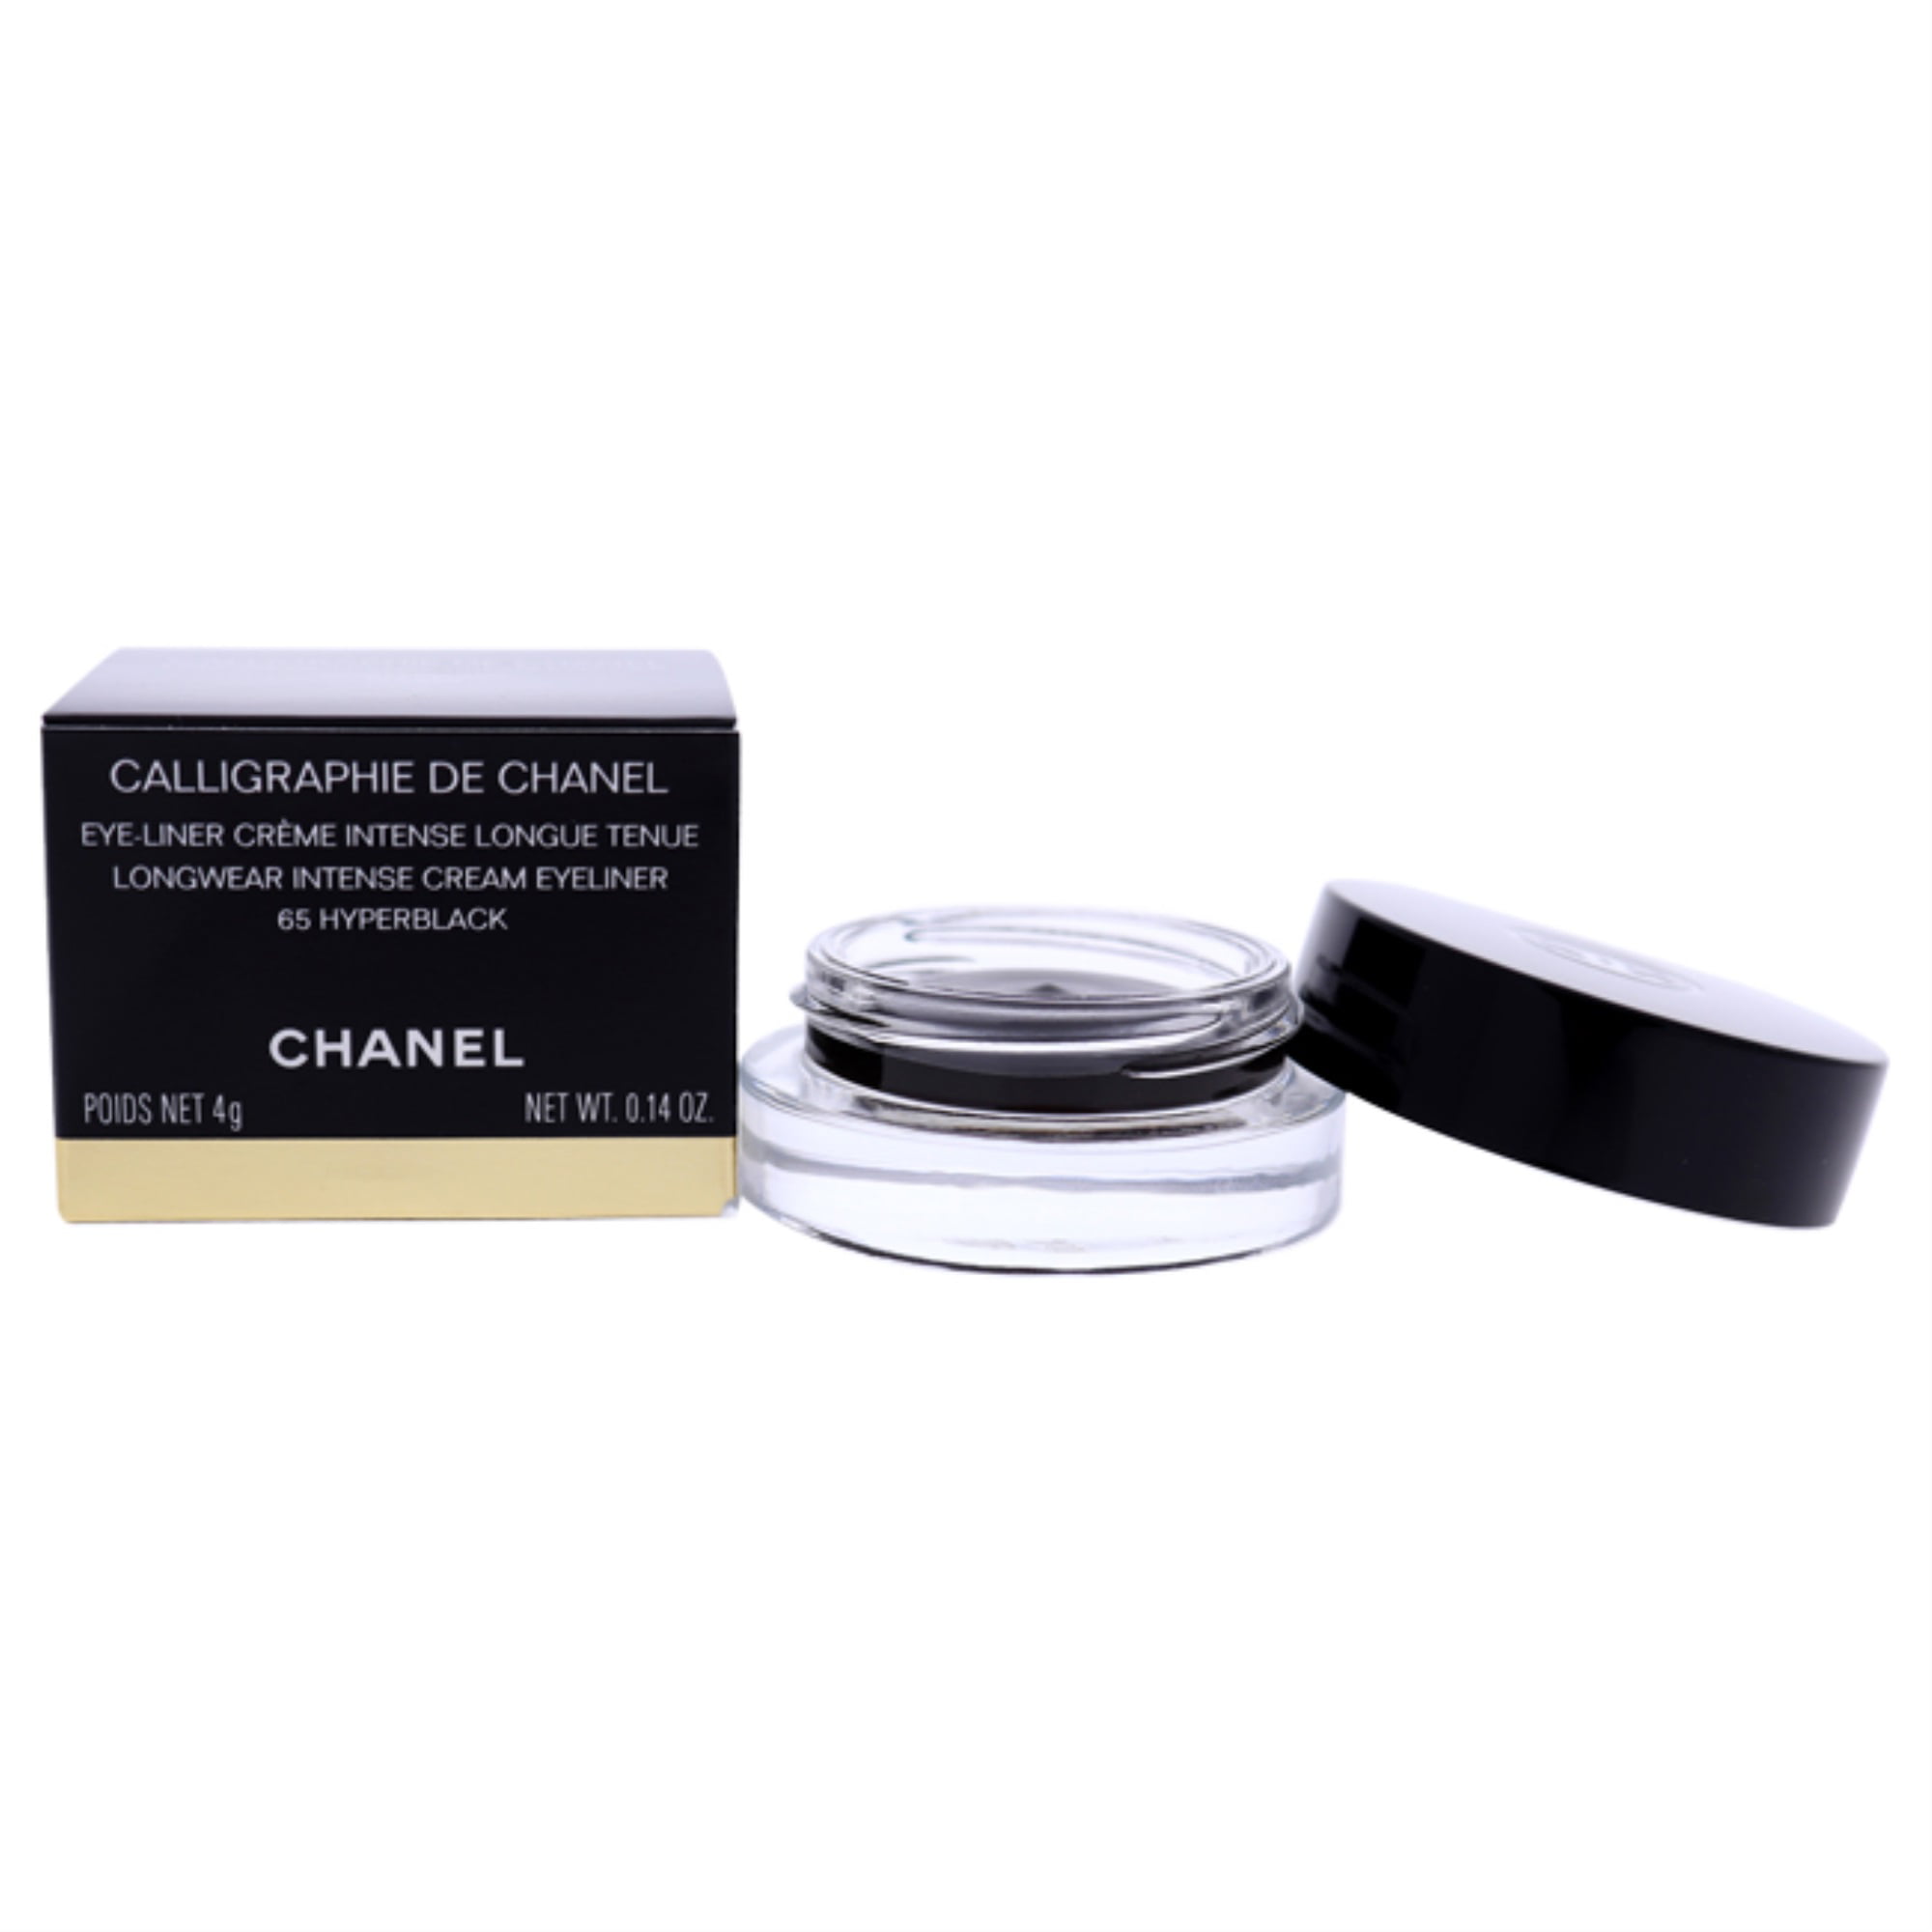 Calligraphie De Chanel Longwear Intense Cream Eyeliner - 65 Hyperblack by  Chanel for Women - 0.14 oz Eyeliner